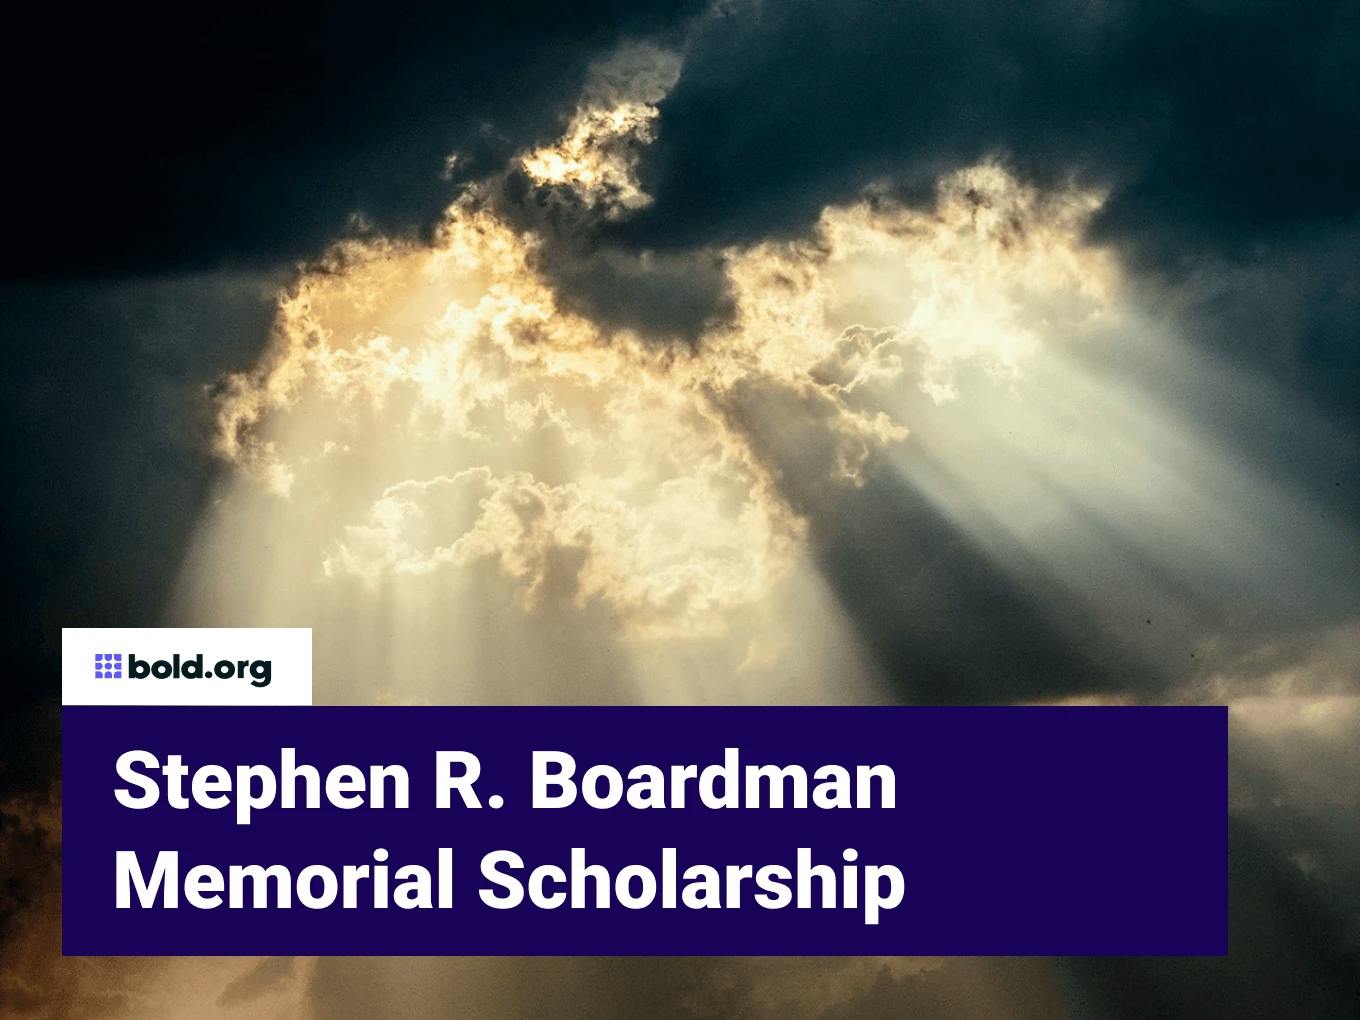 Stephen R. Boardman Memorial Scholarship